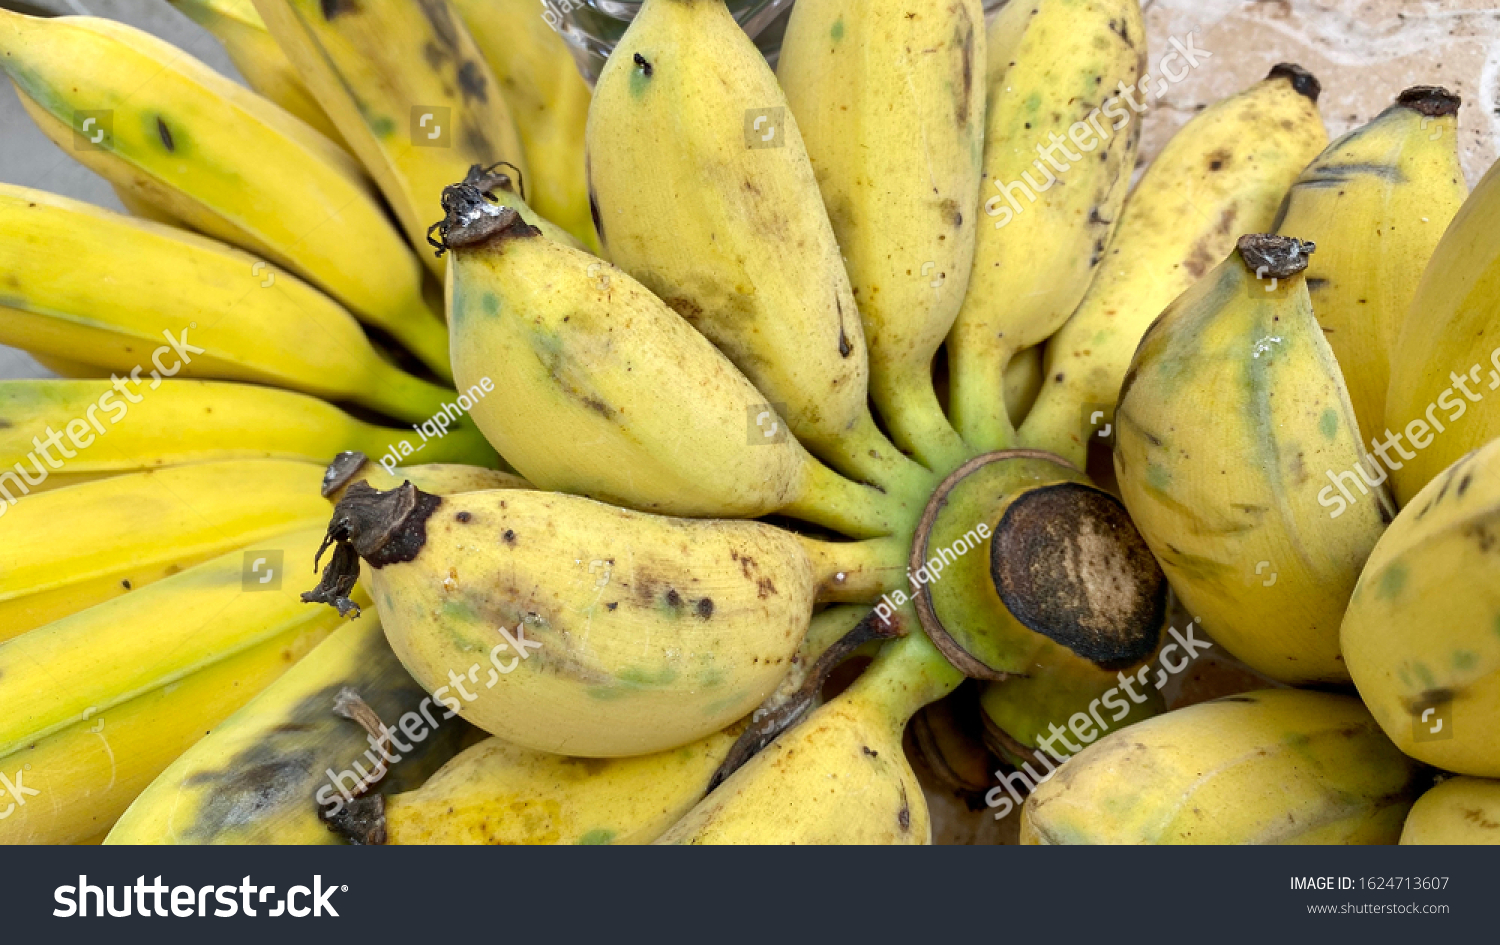 Yellow ripe banana is ripe to eat. #1624713607